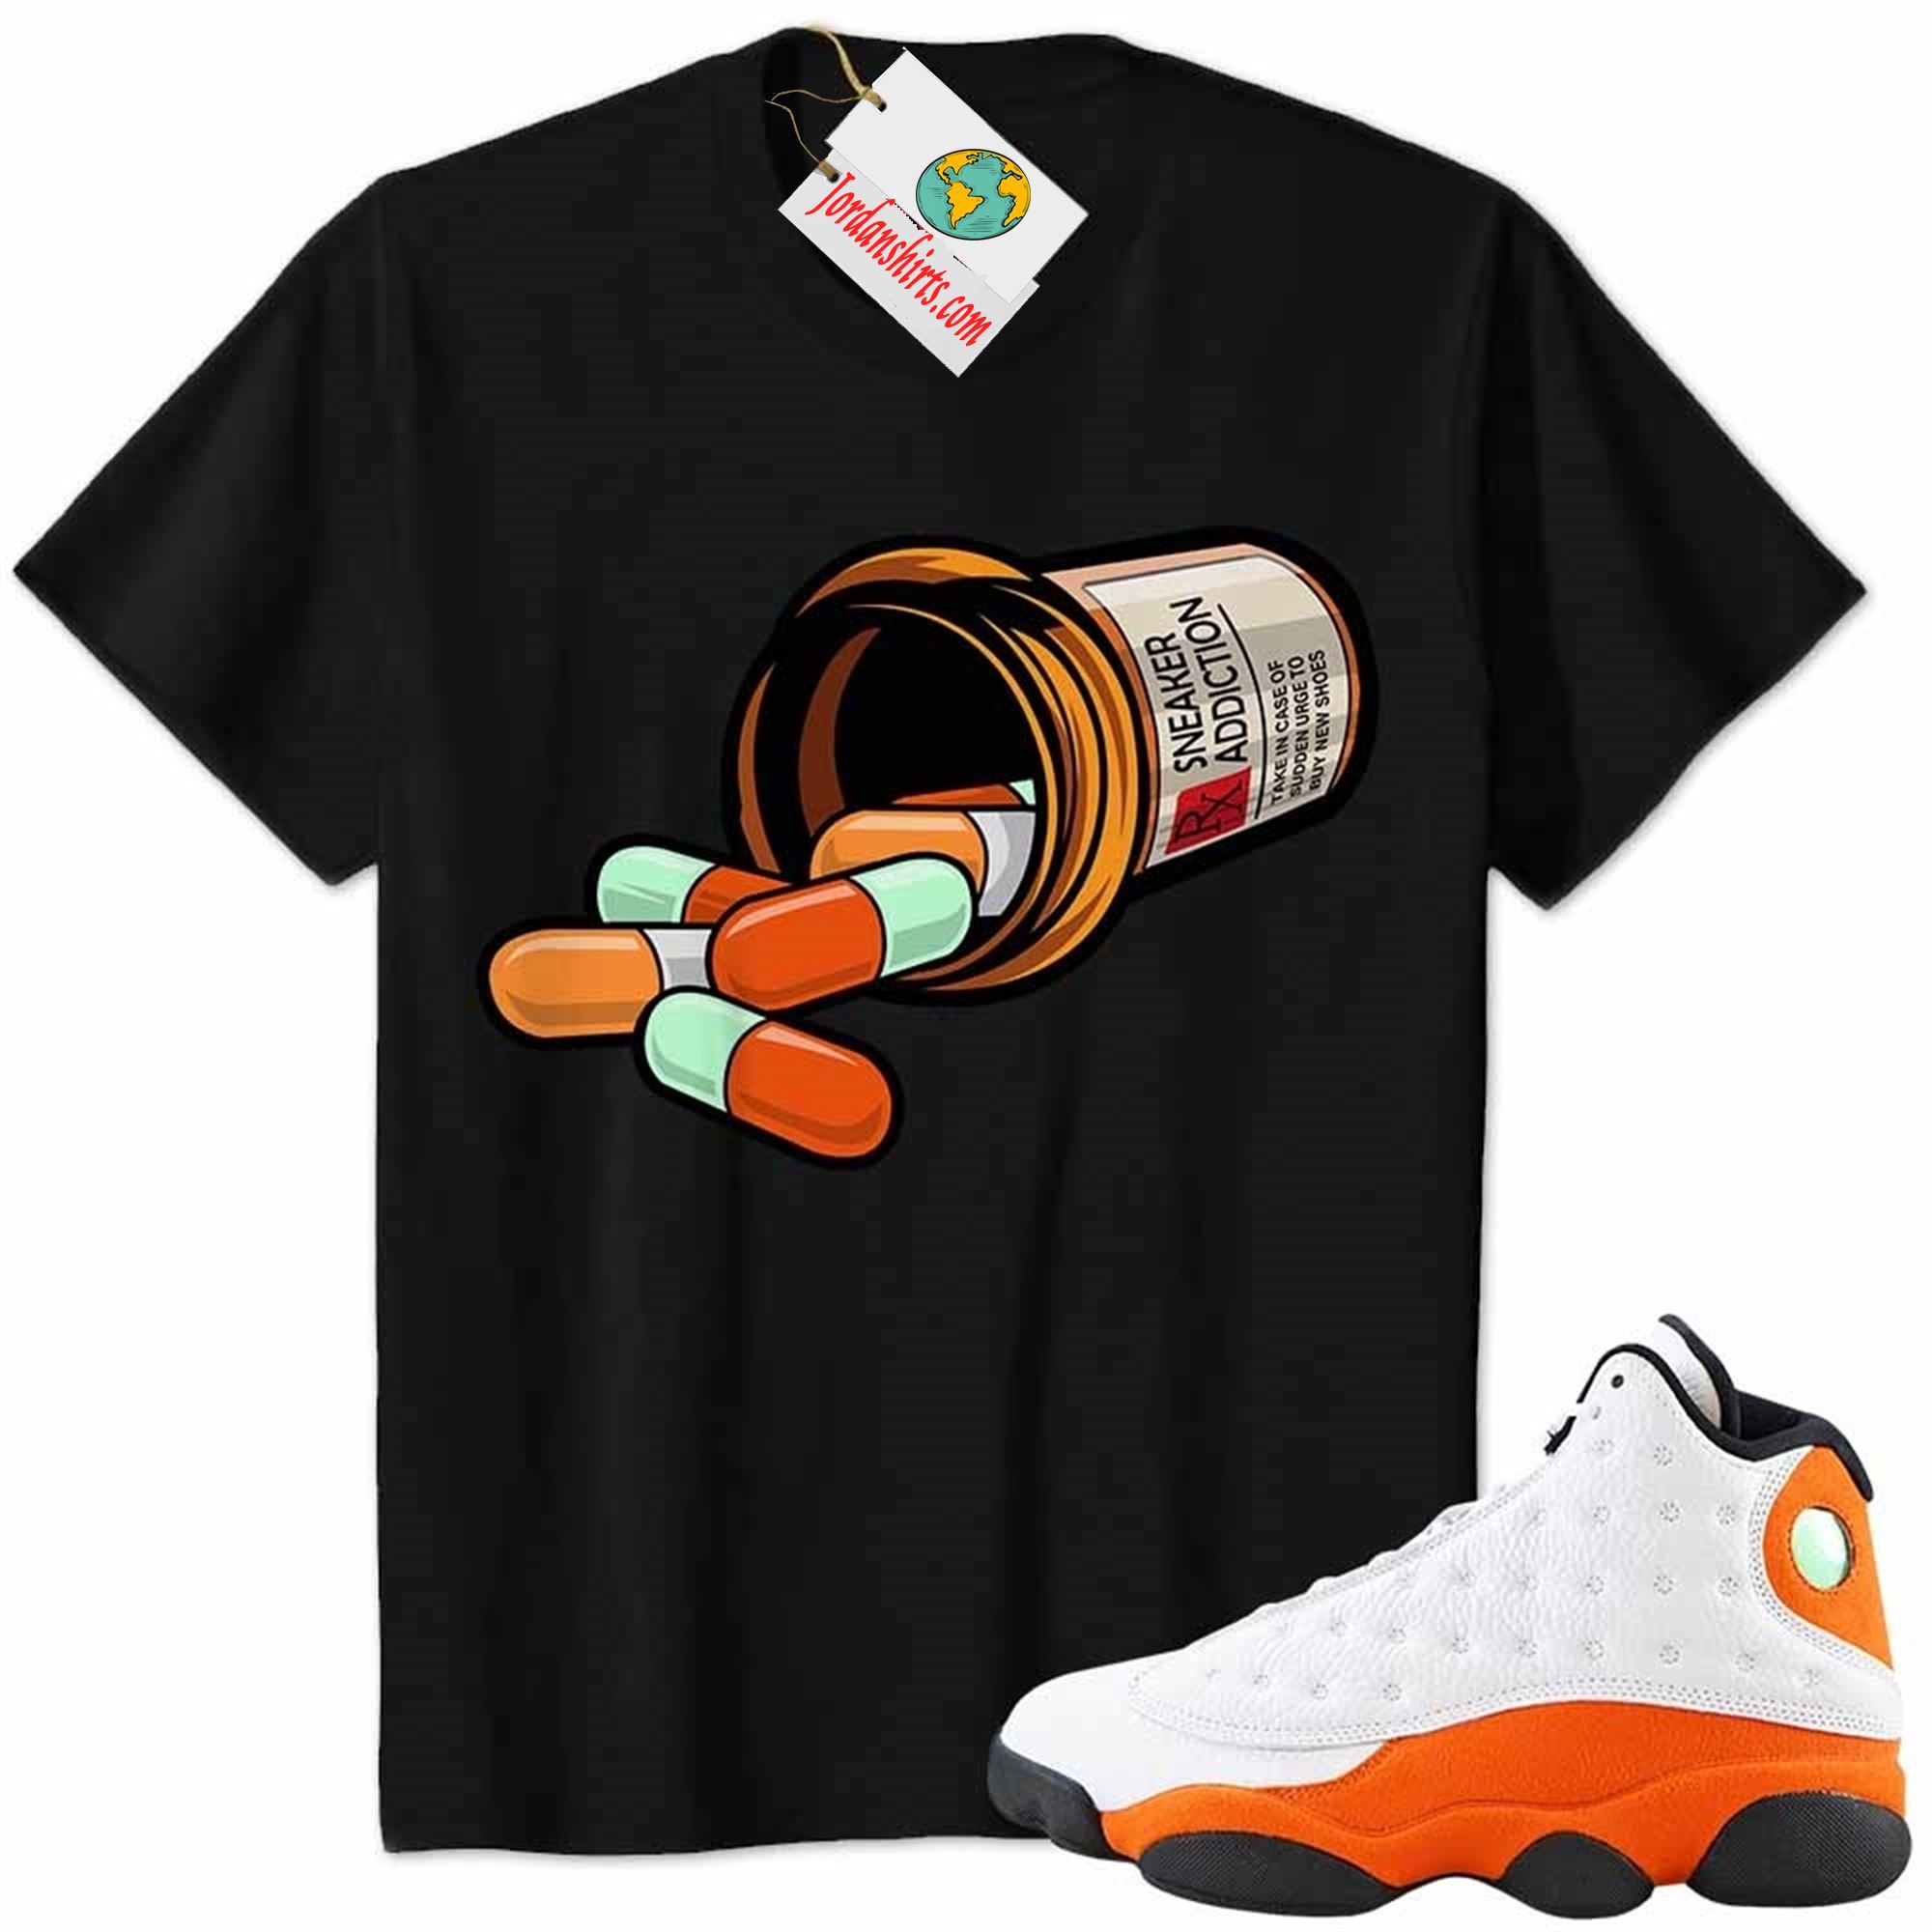 Jordan 13 Shirt, Rx Drugs Pill Bottle Sneaker Addiction Black Air Jordan 13 Starfish 13s Plus Size Up To 5xl